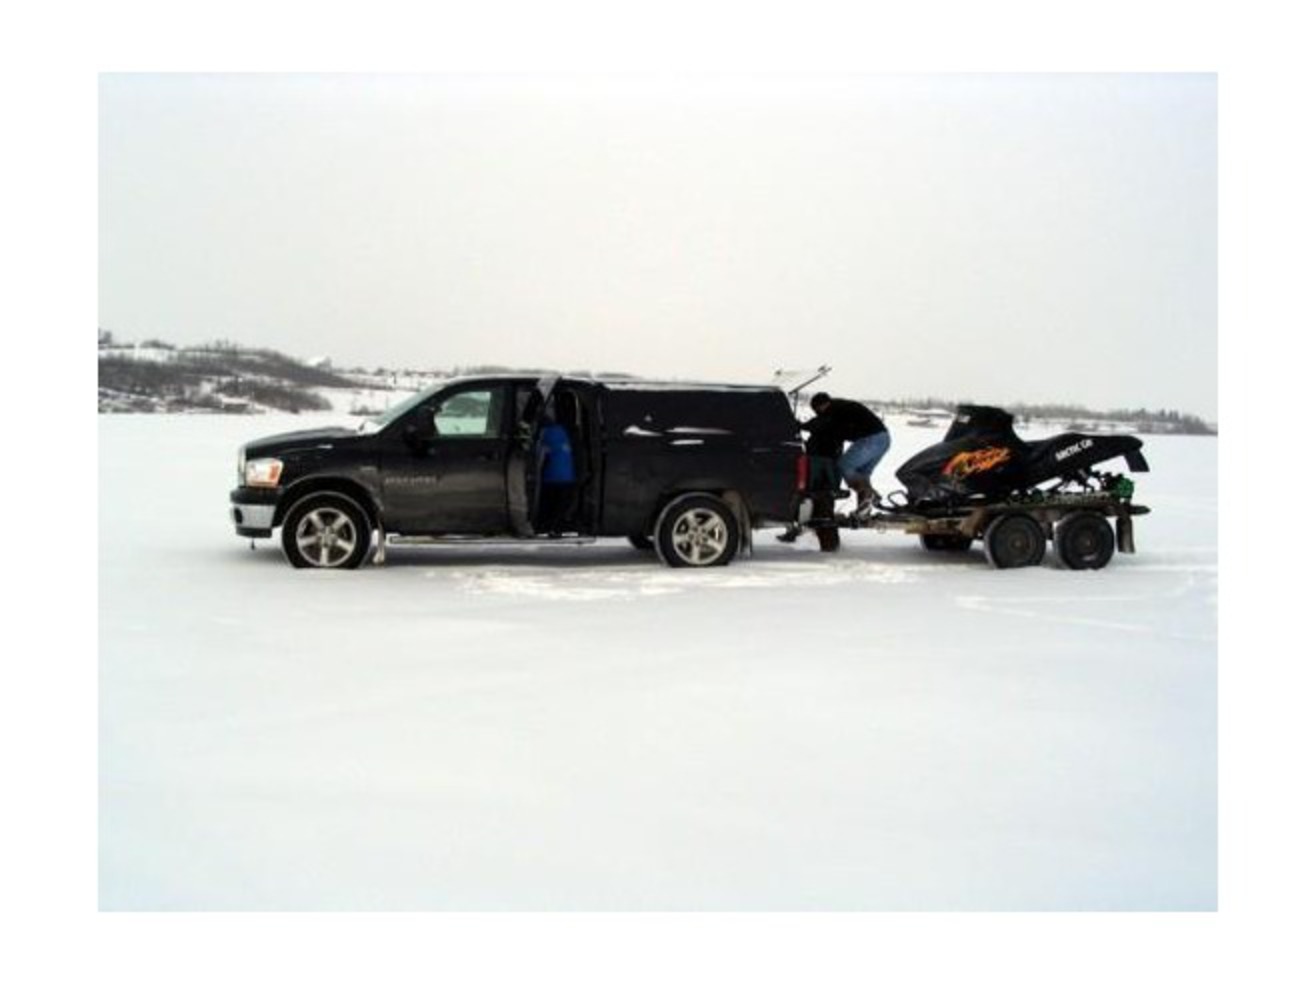 Kevin's 1500 Dodge Ram 4WD & snowmobile trailer - Red Deer